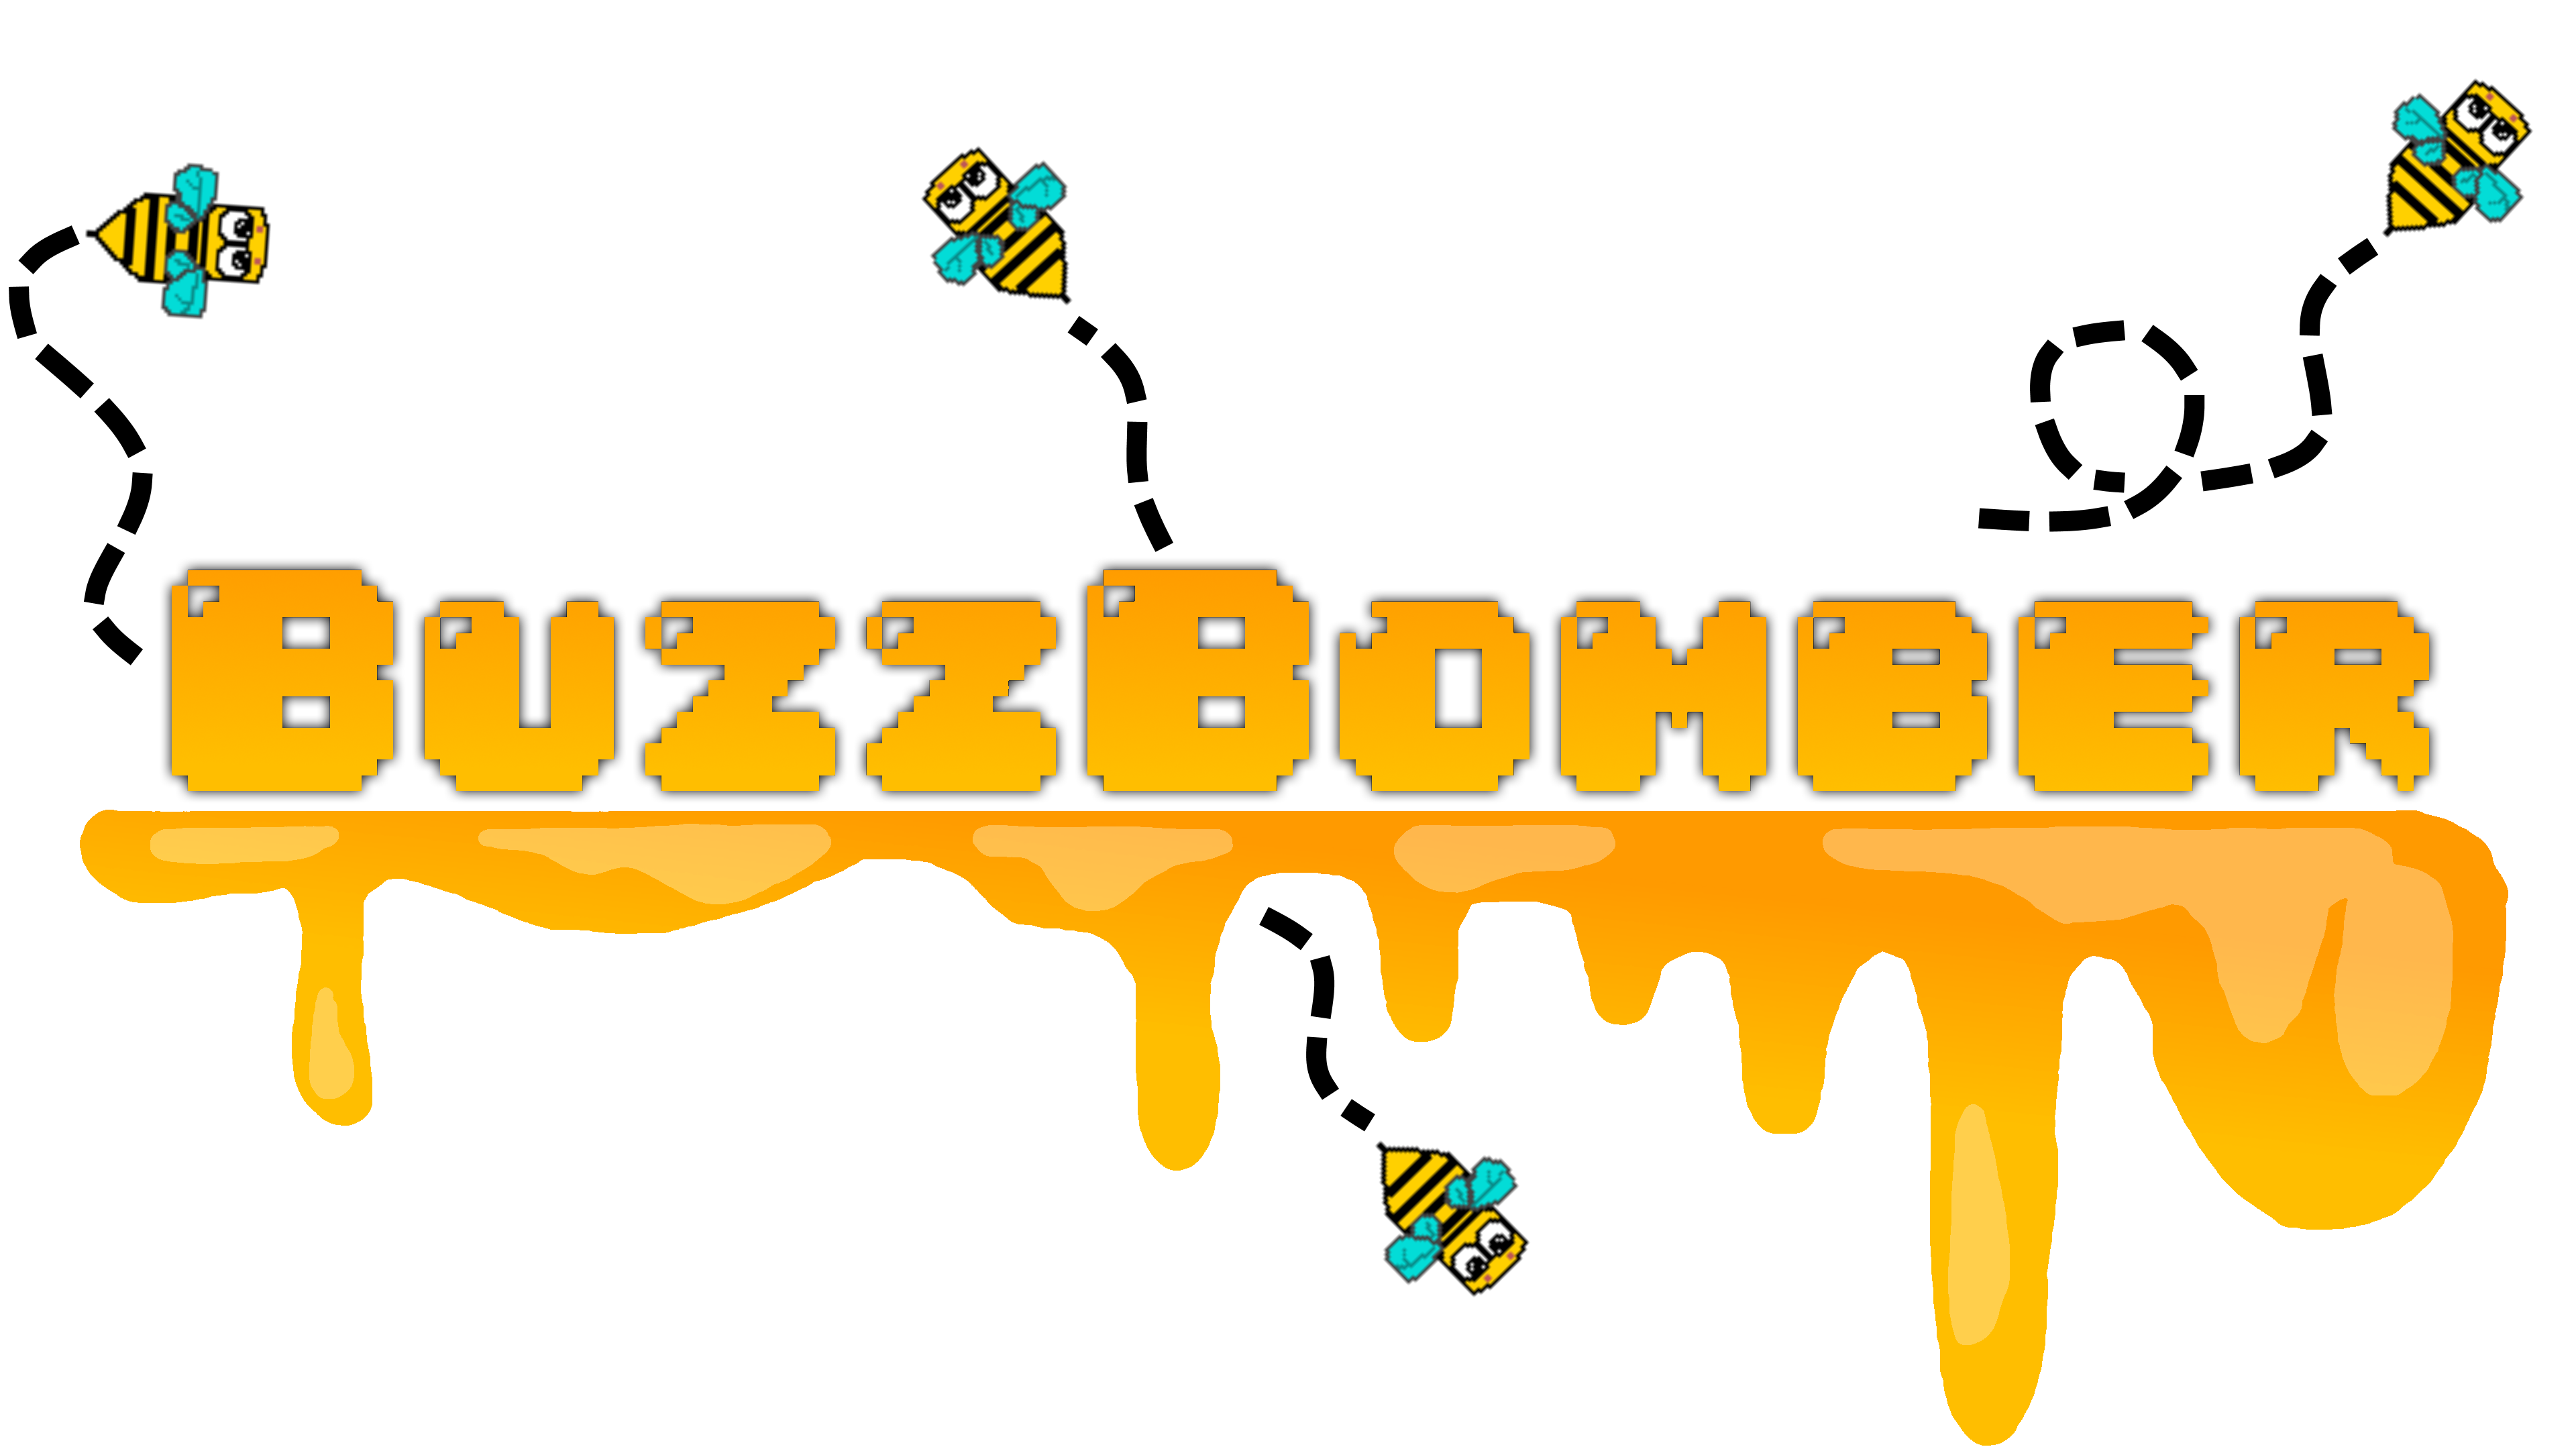 Buzz Bomber